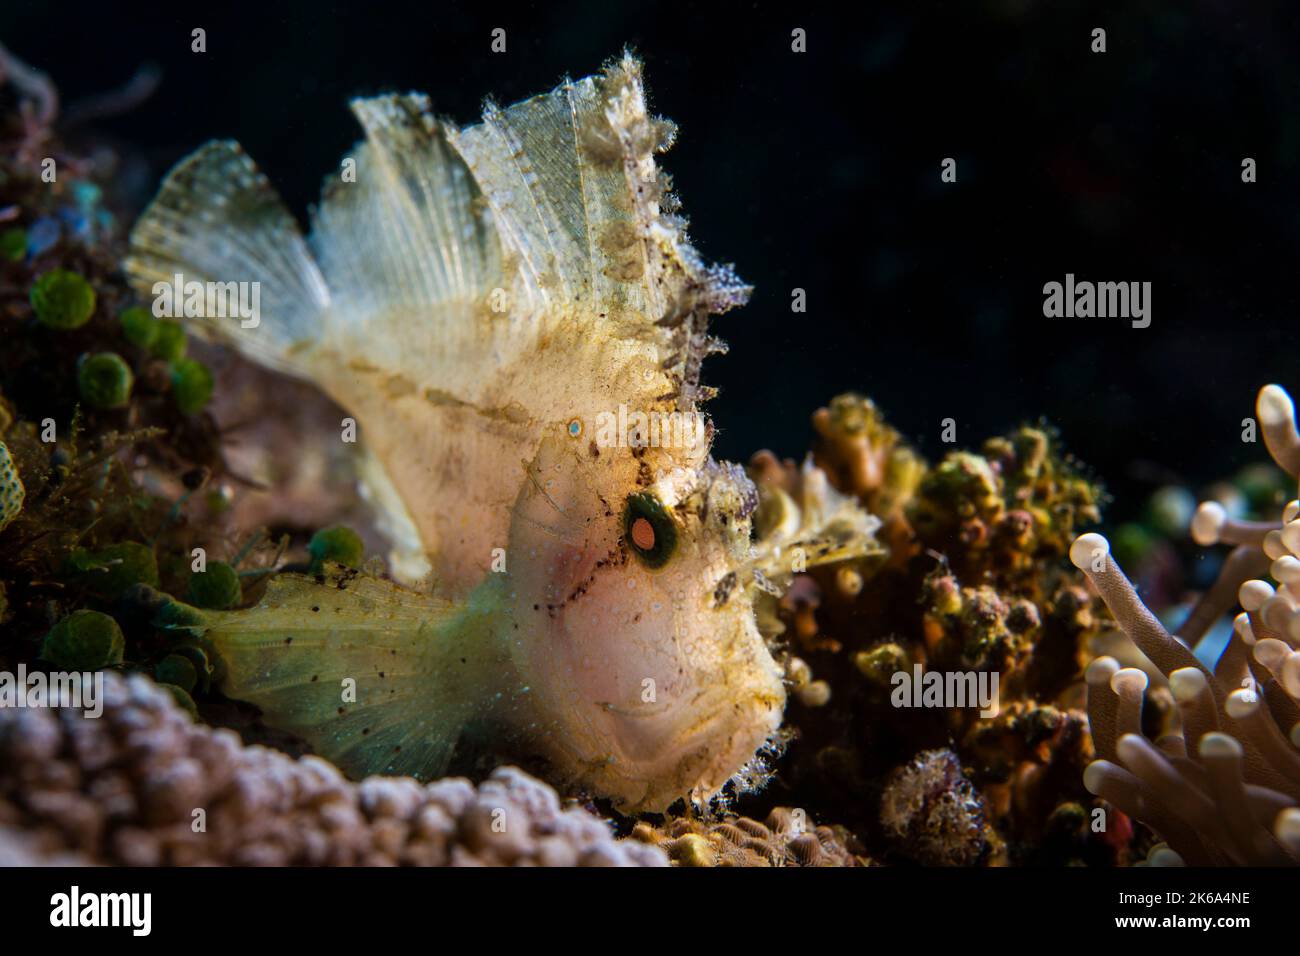 A leaf scorpionfish (Taenianotus triacanthus), Anilao, Philippines. Stock Photo